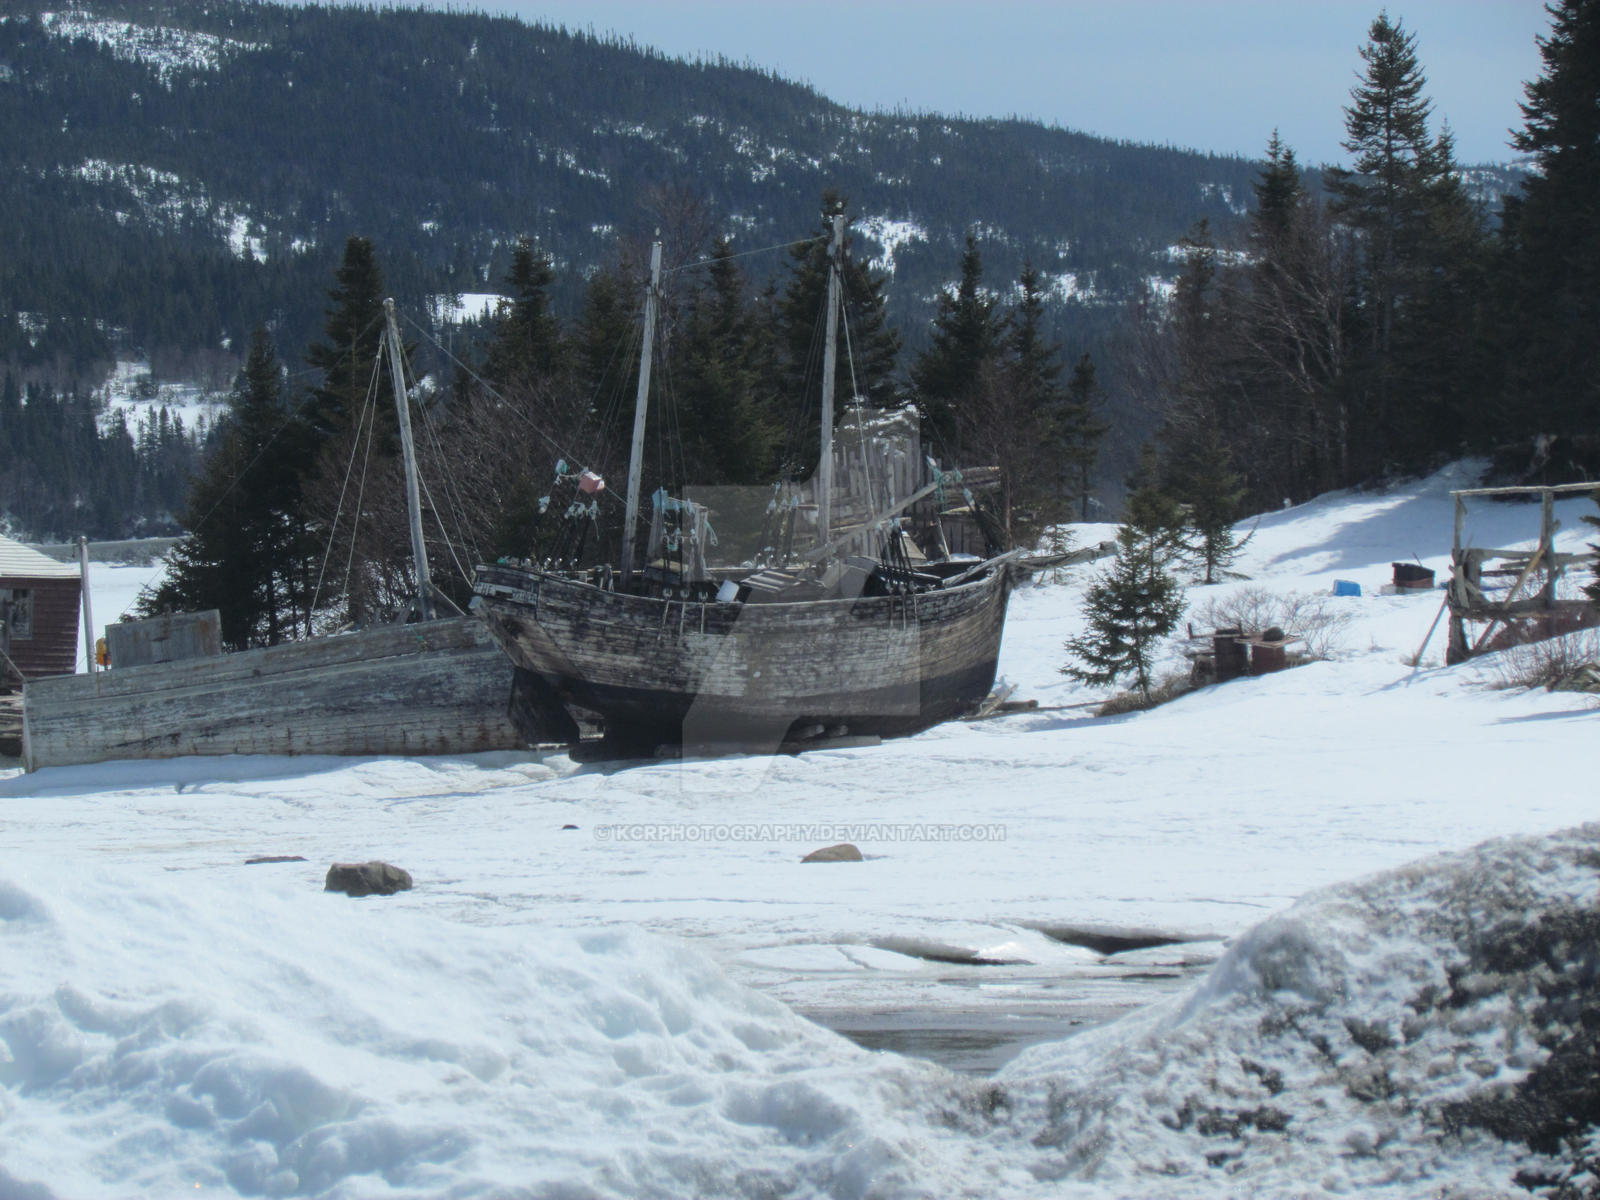 Ship Wreck Bide Newfoundland by kcrphotography on